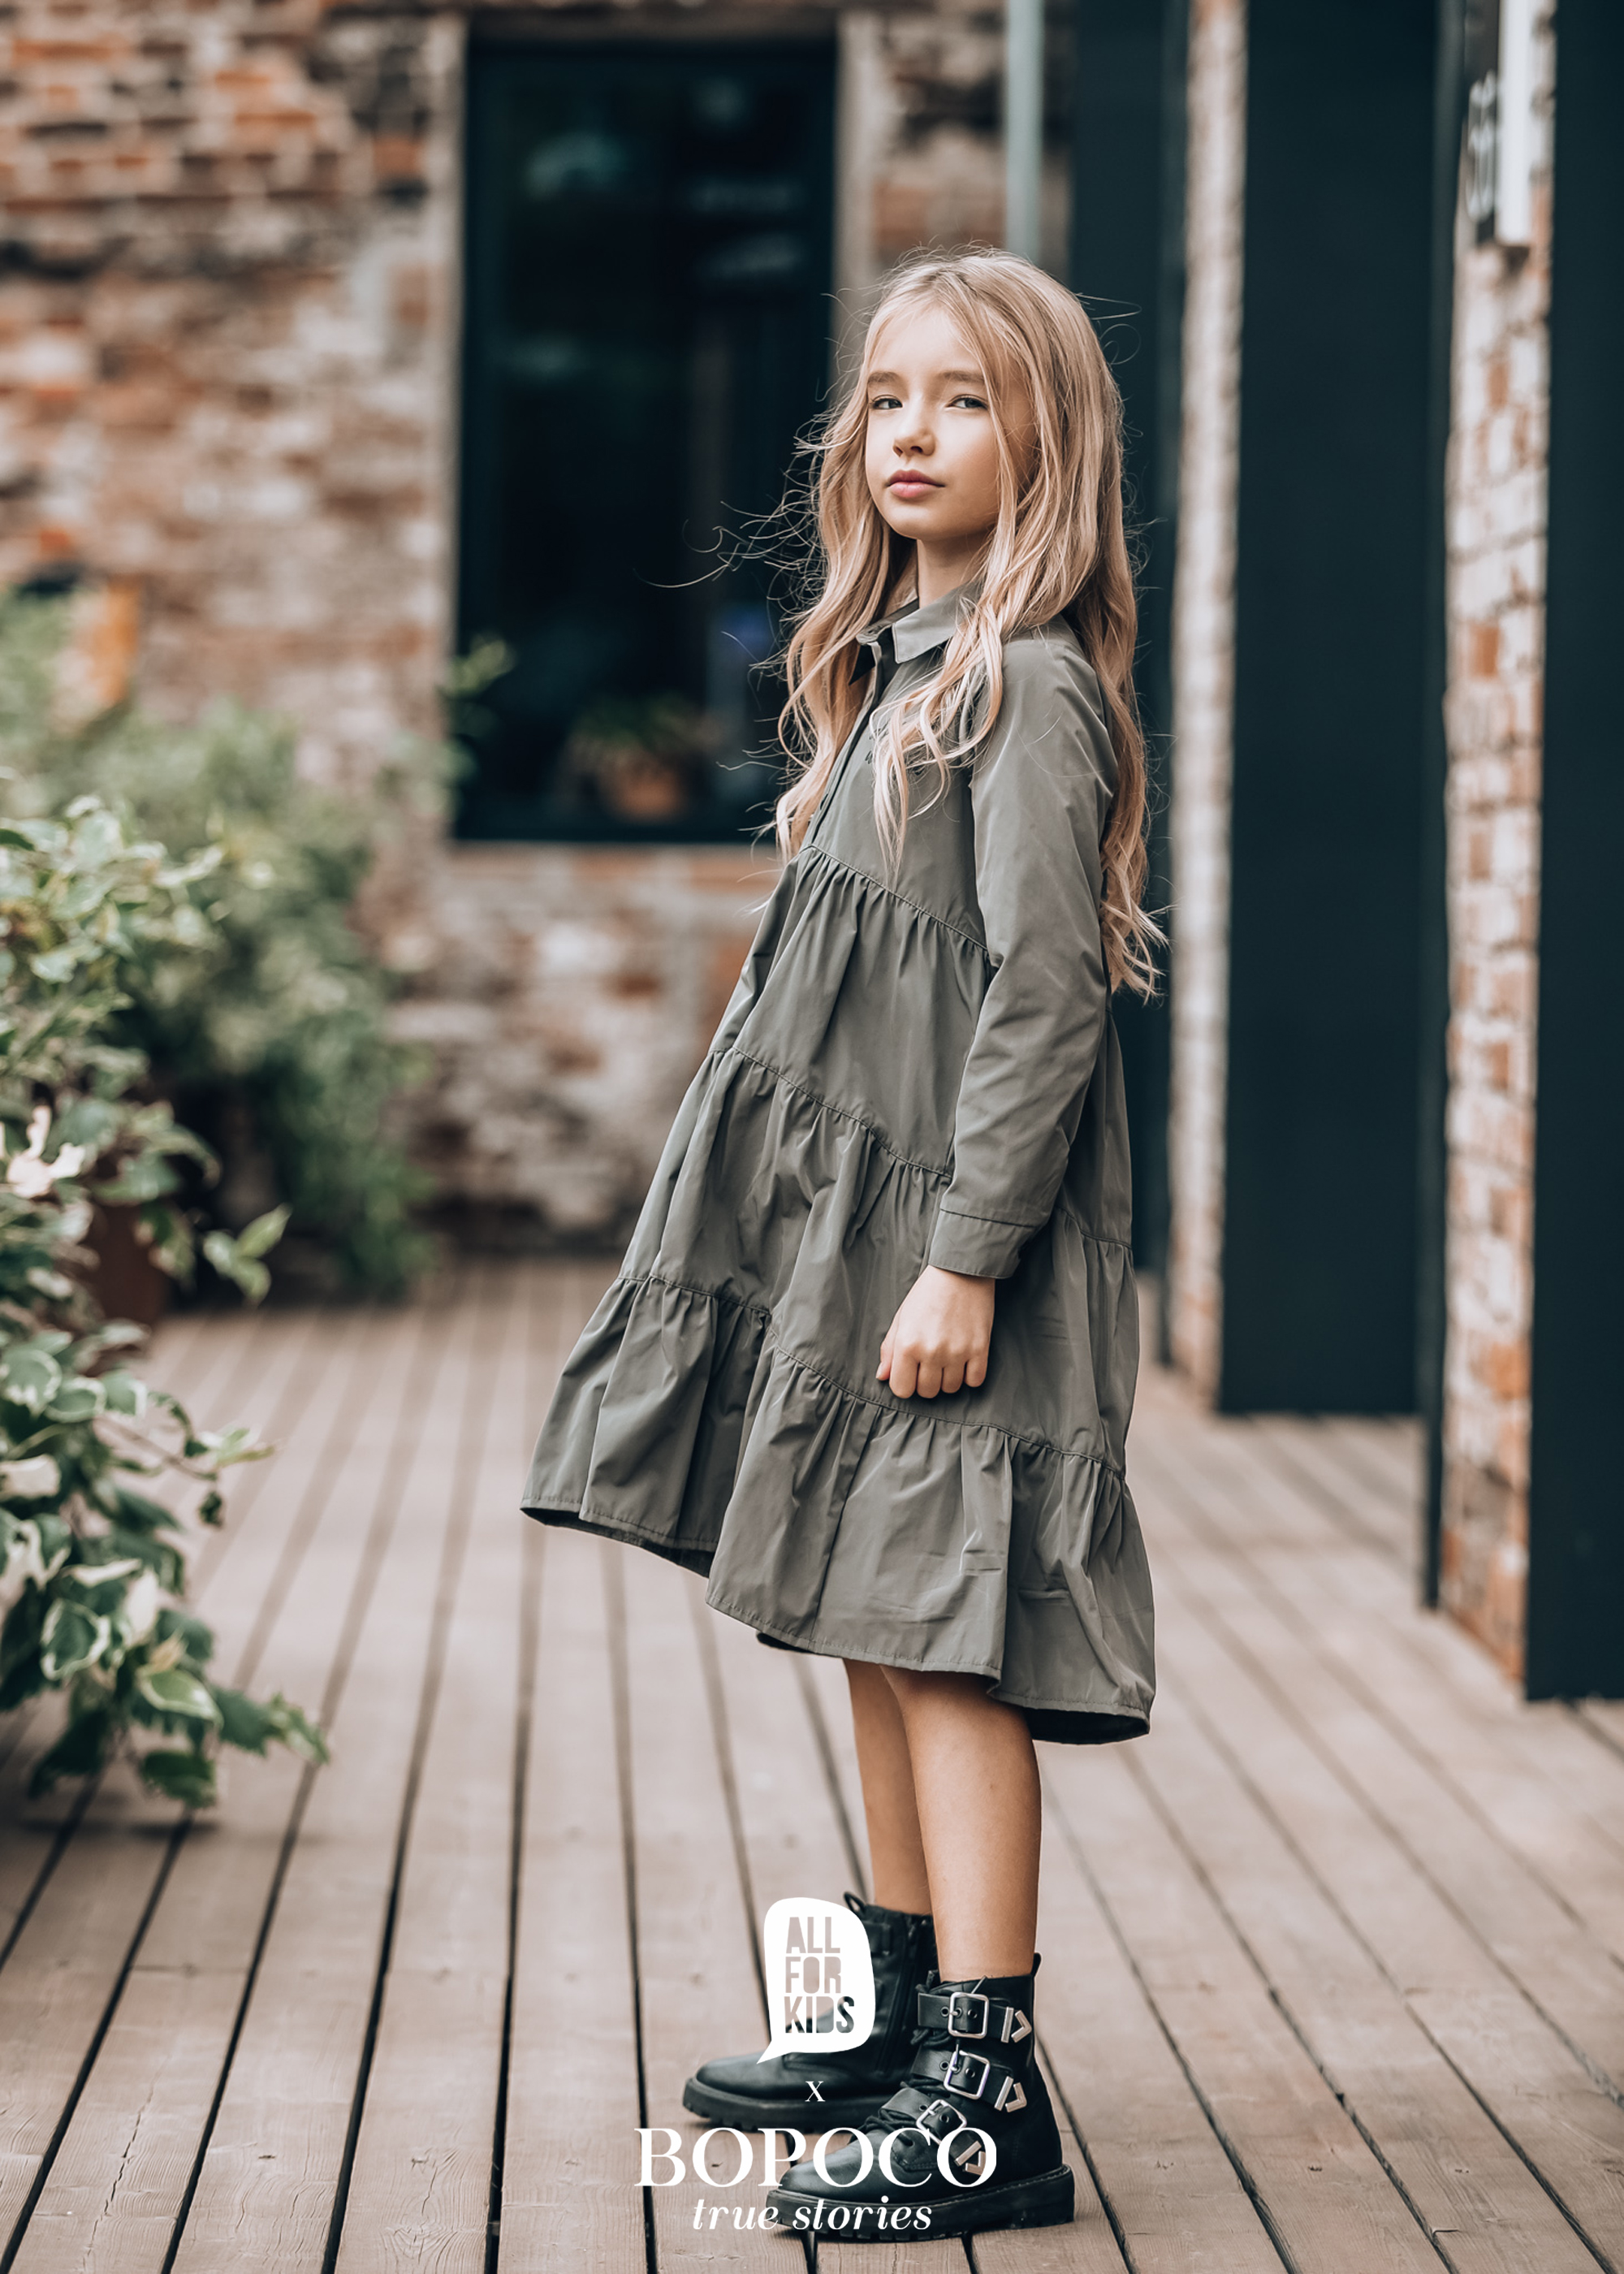 Dievčenské šuštiakové dlhé šaty - ALL FOR KIDS zelená